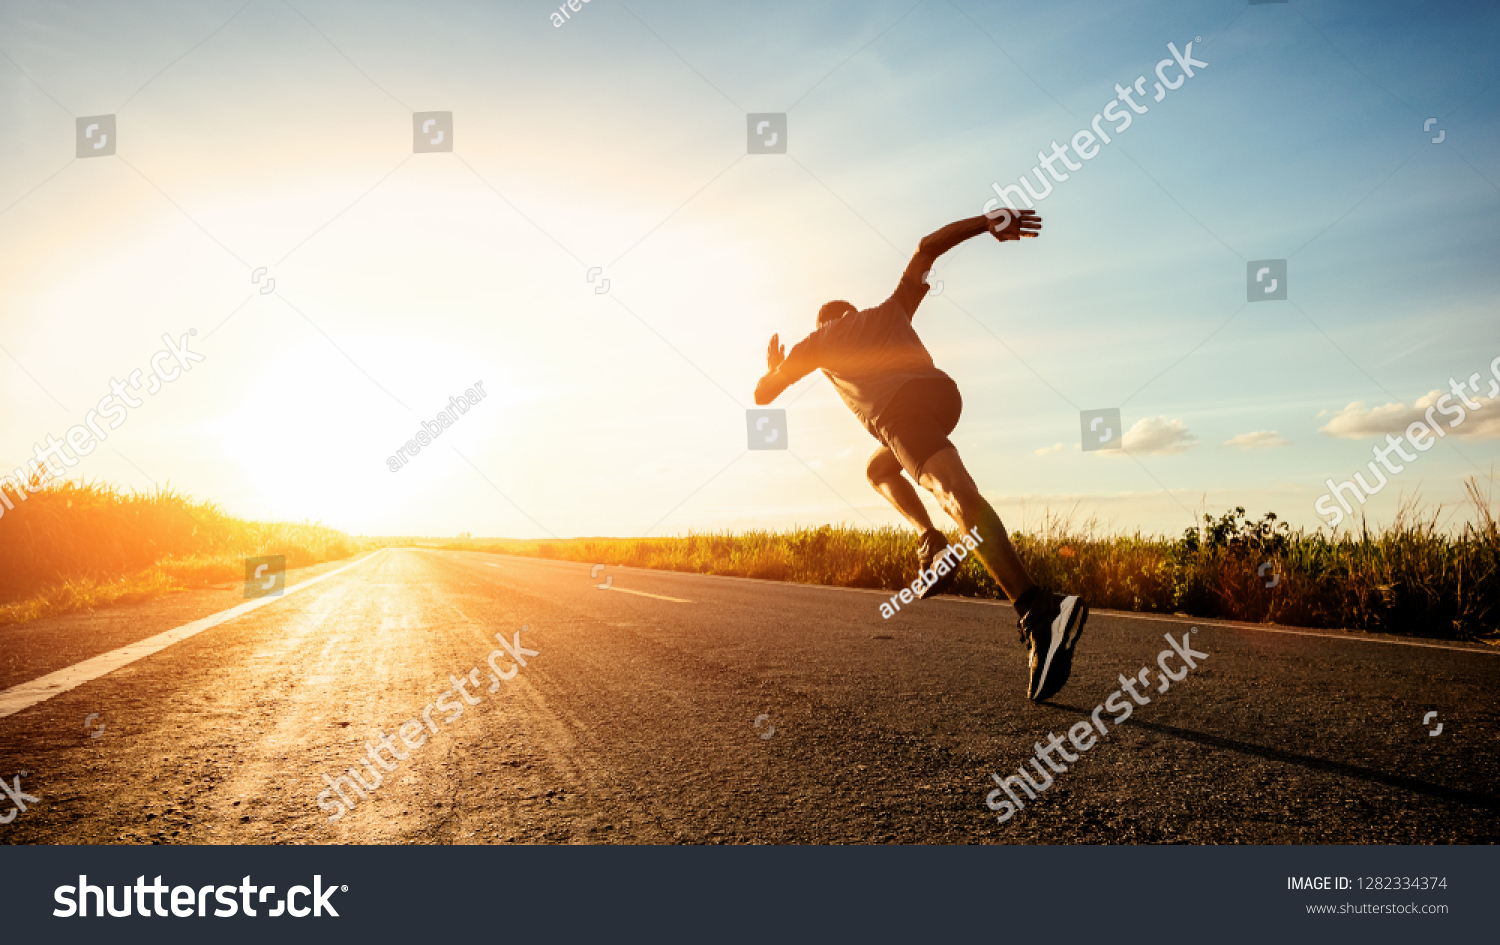 Athlete runner feet running on road #1282334374